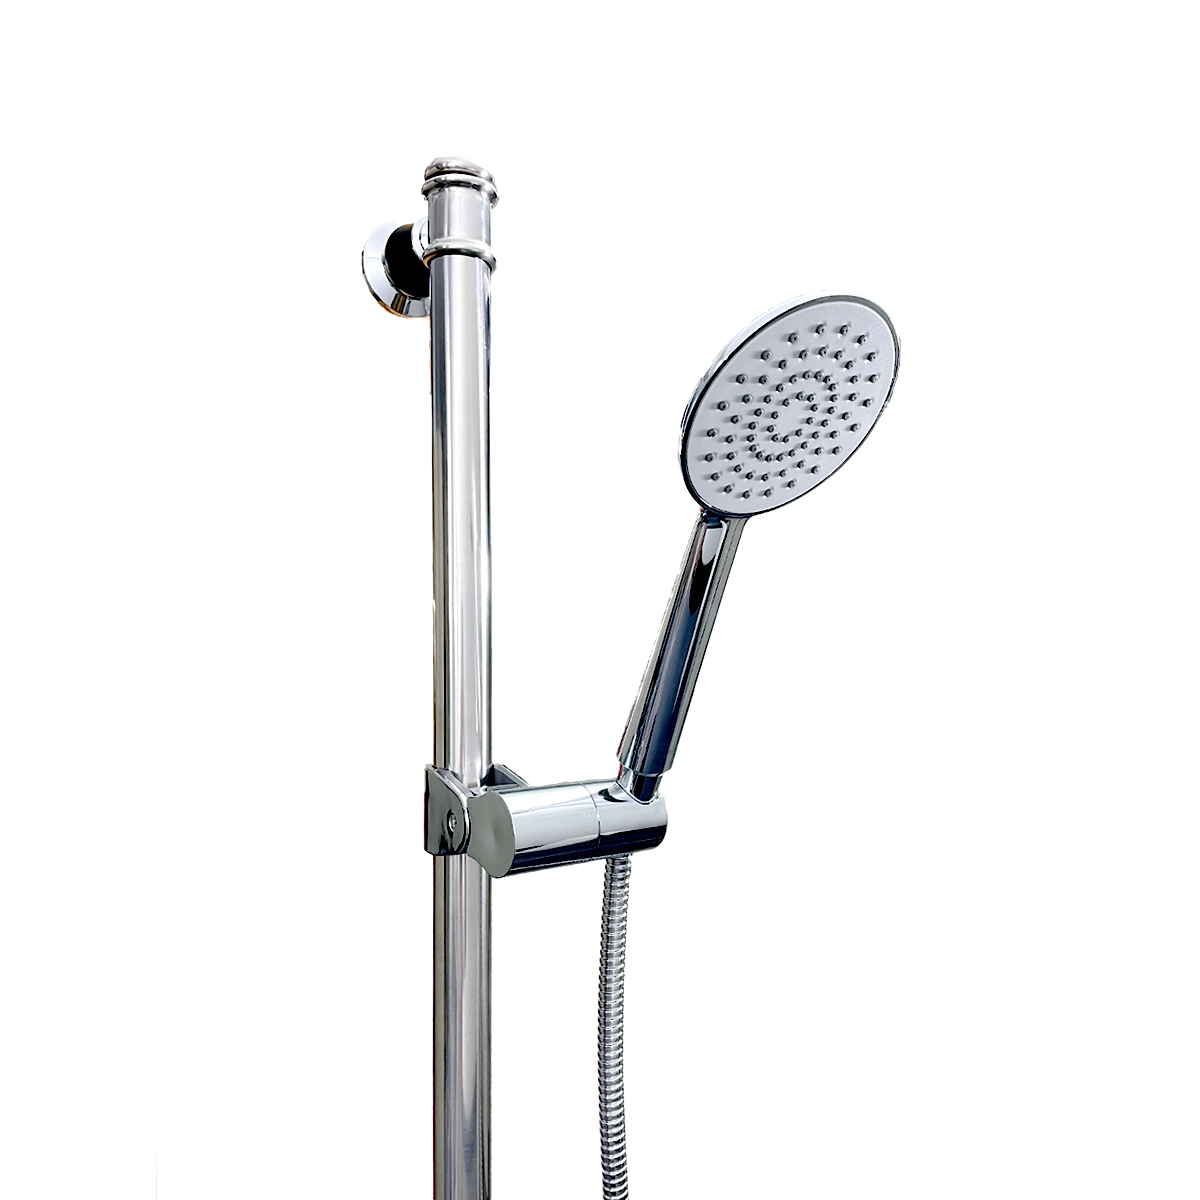 Pepper Designer Rail and caress Hand Shower Set, accessible shower, hand shower, disability shower, disabled shower